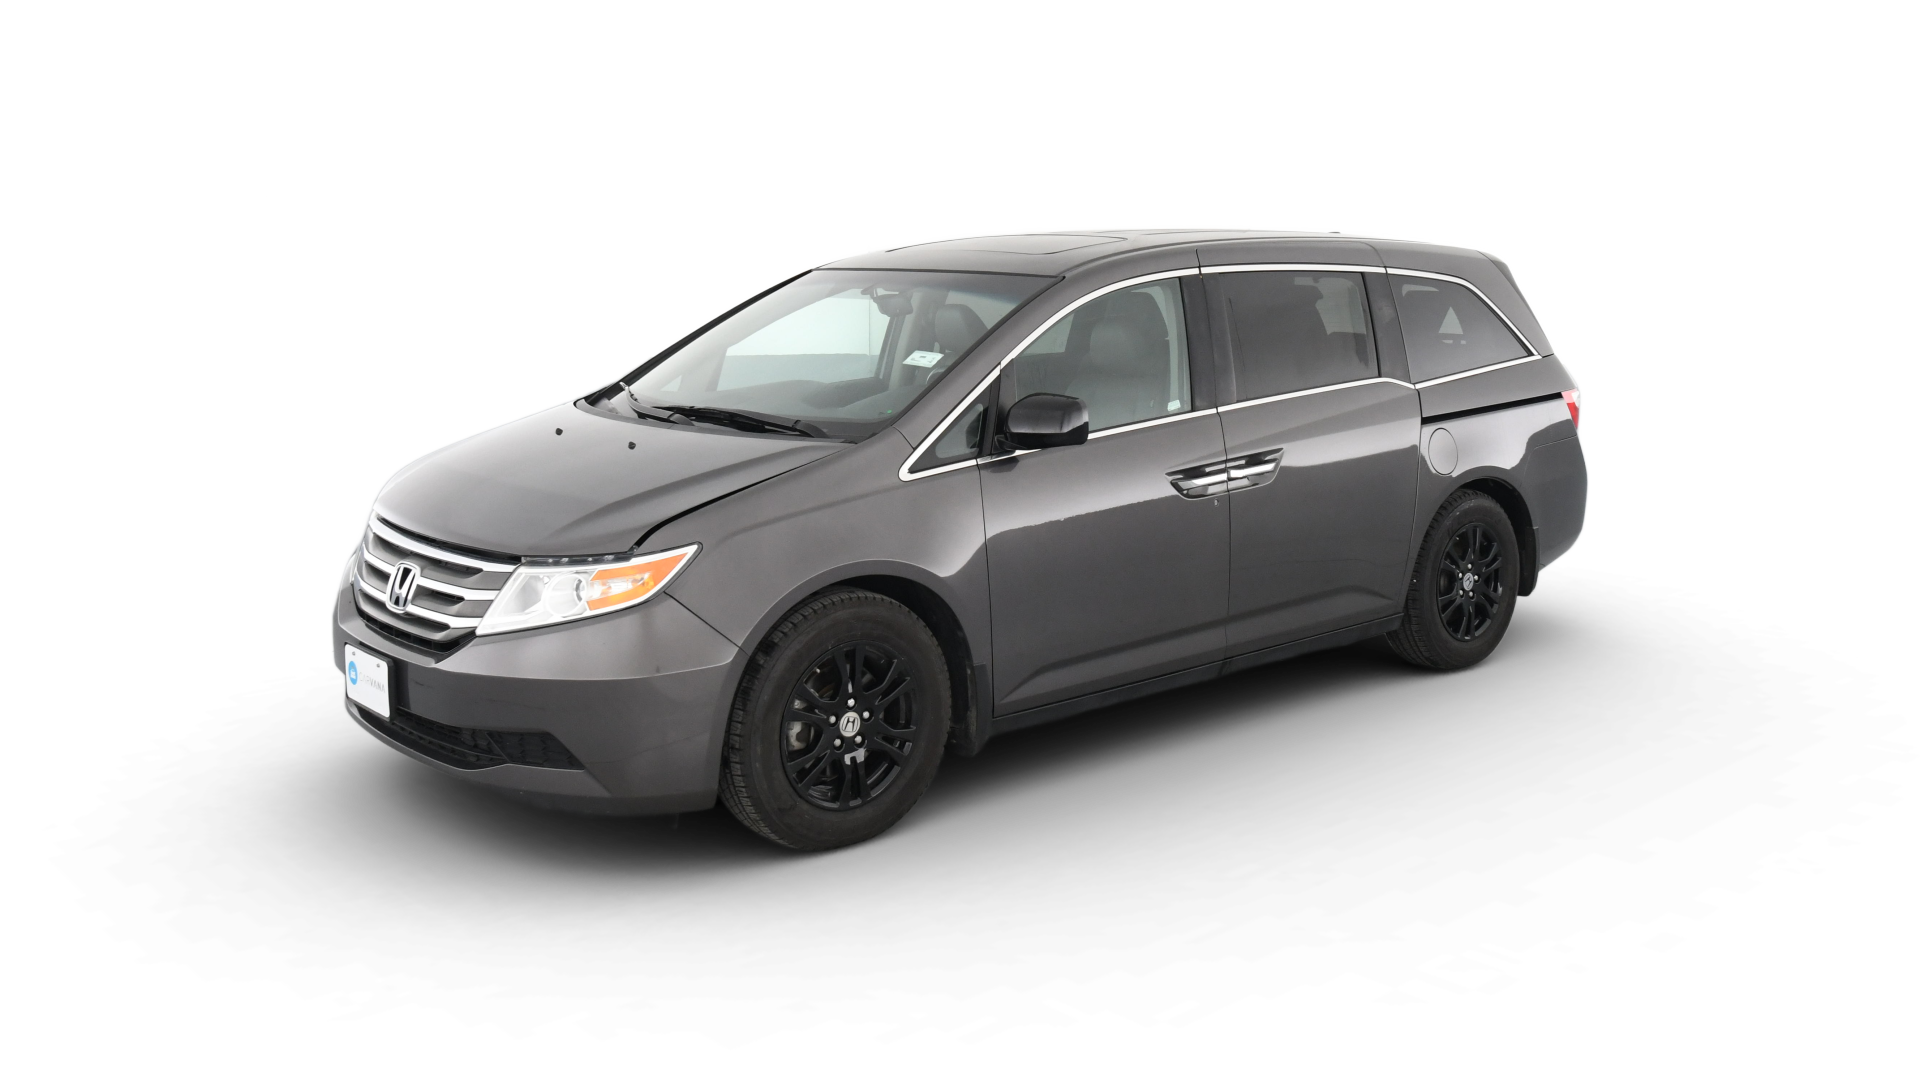 Used 2013 Honda Odyssey For Sale Online | Carvana